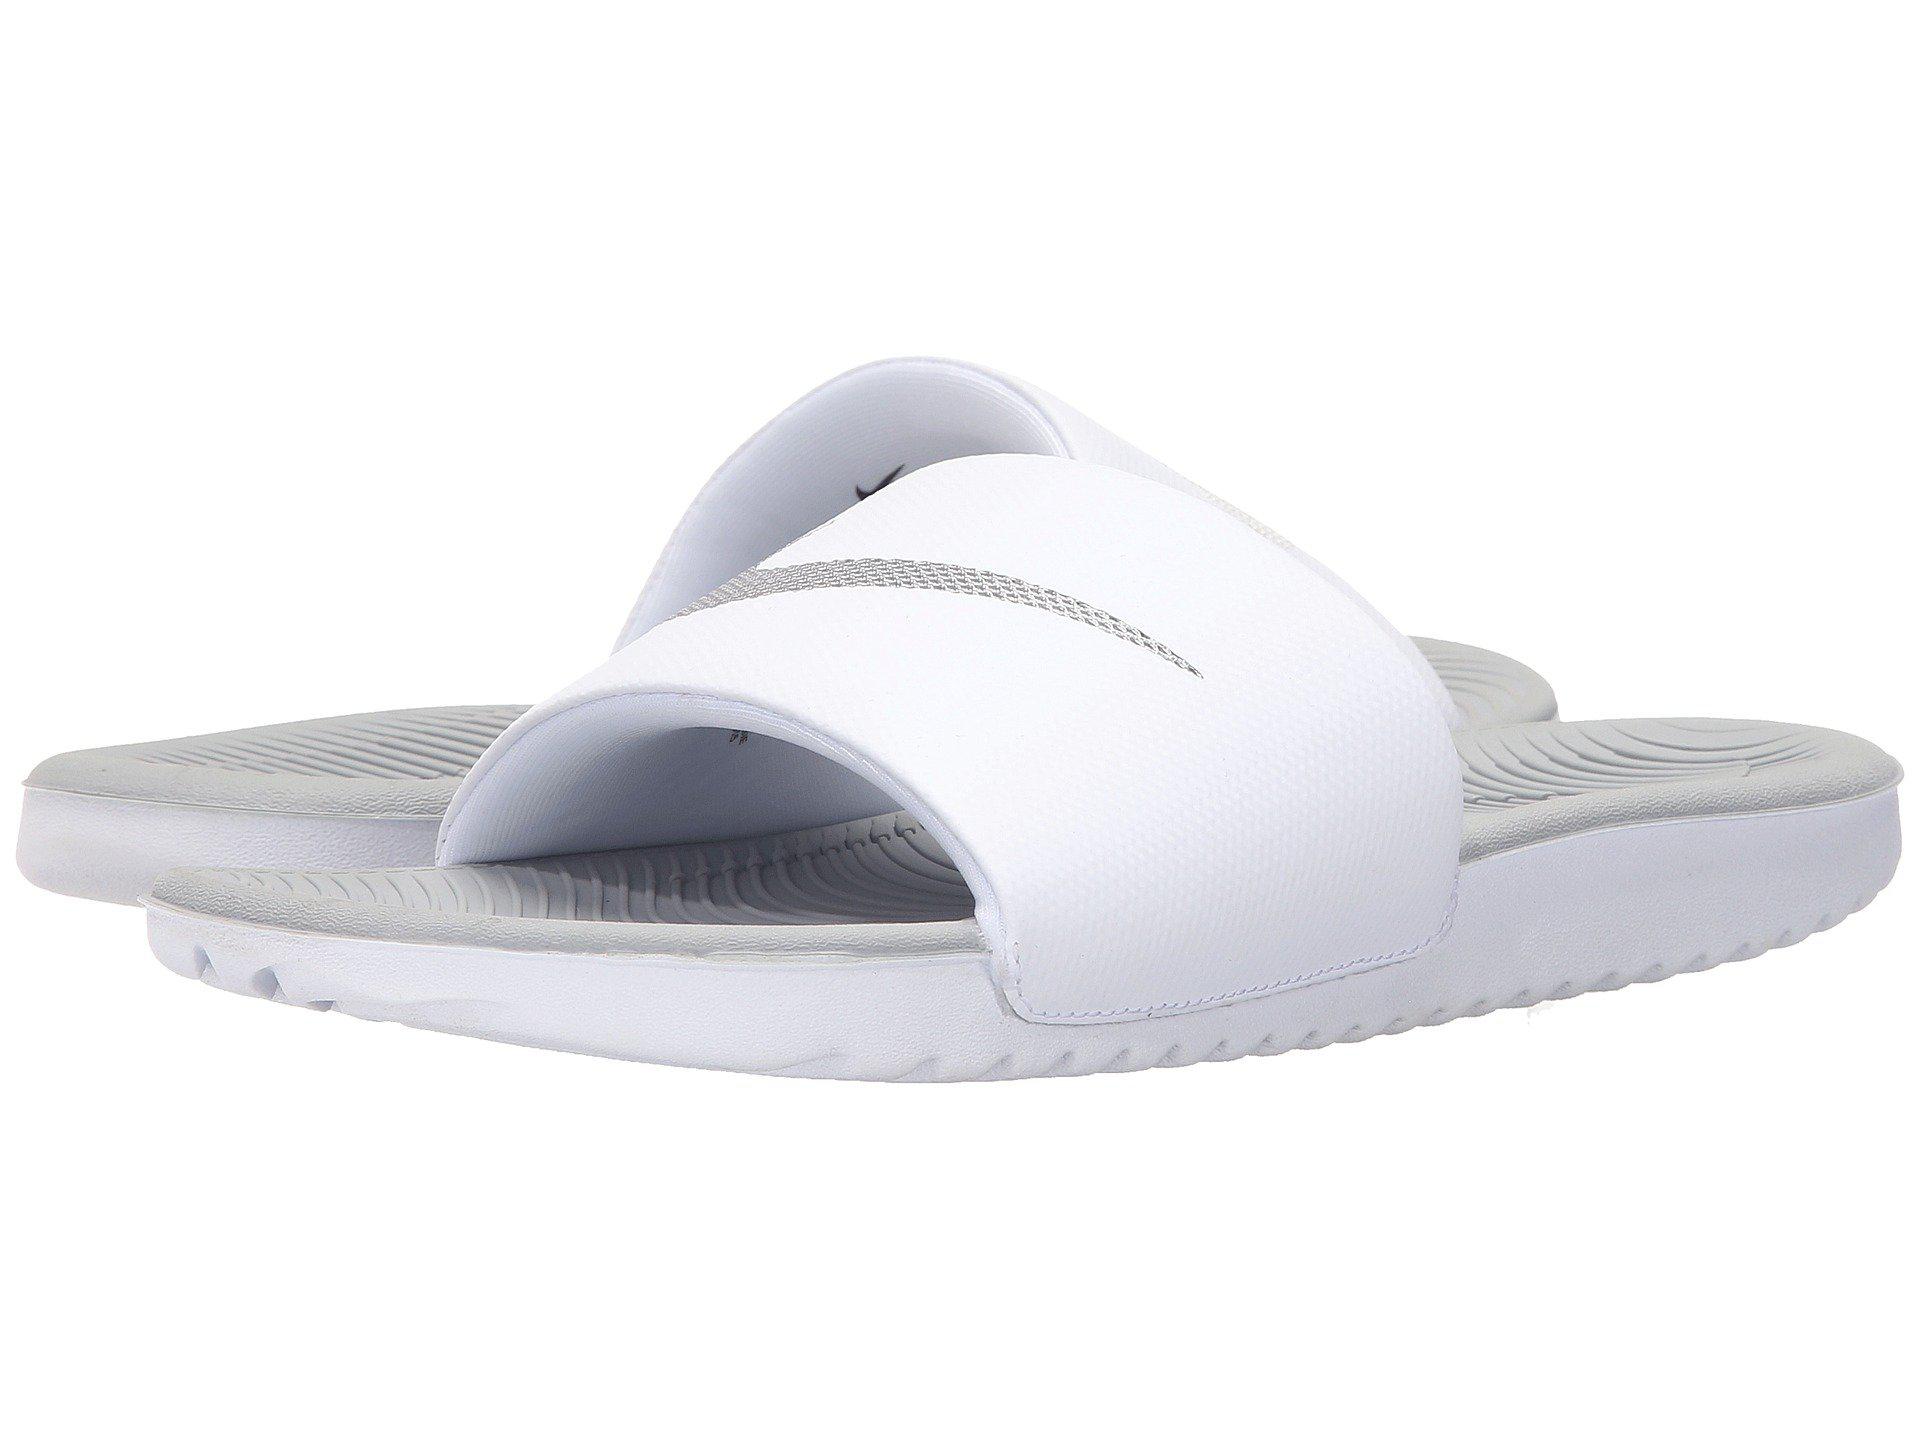 Nike Synthetic Kawa Slide (white/metallic Silver) Women's Sandals | Lyst